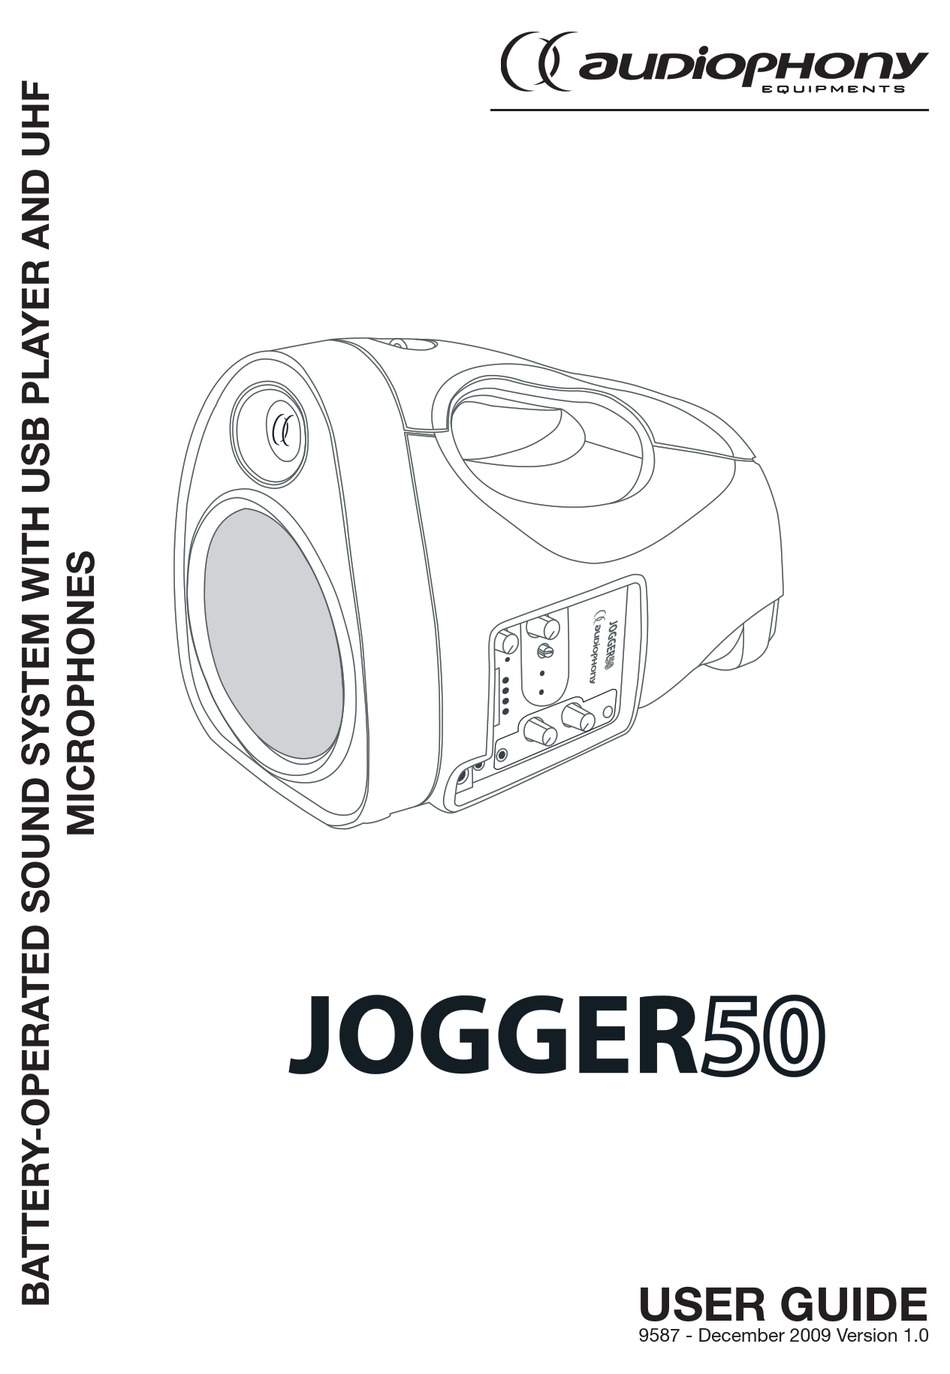 jogger 50 audiophony